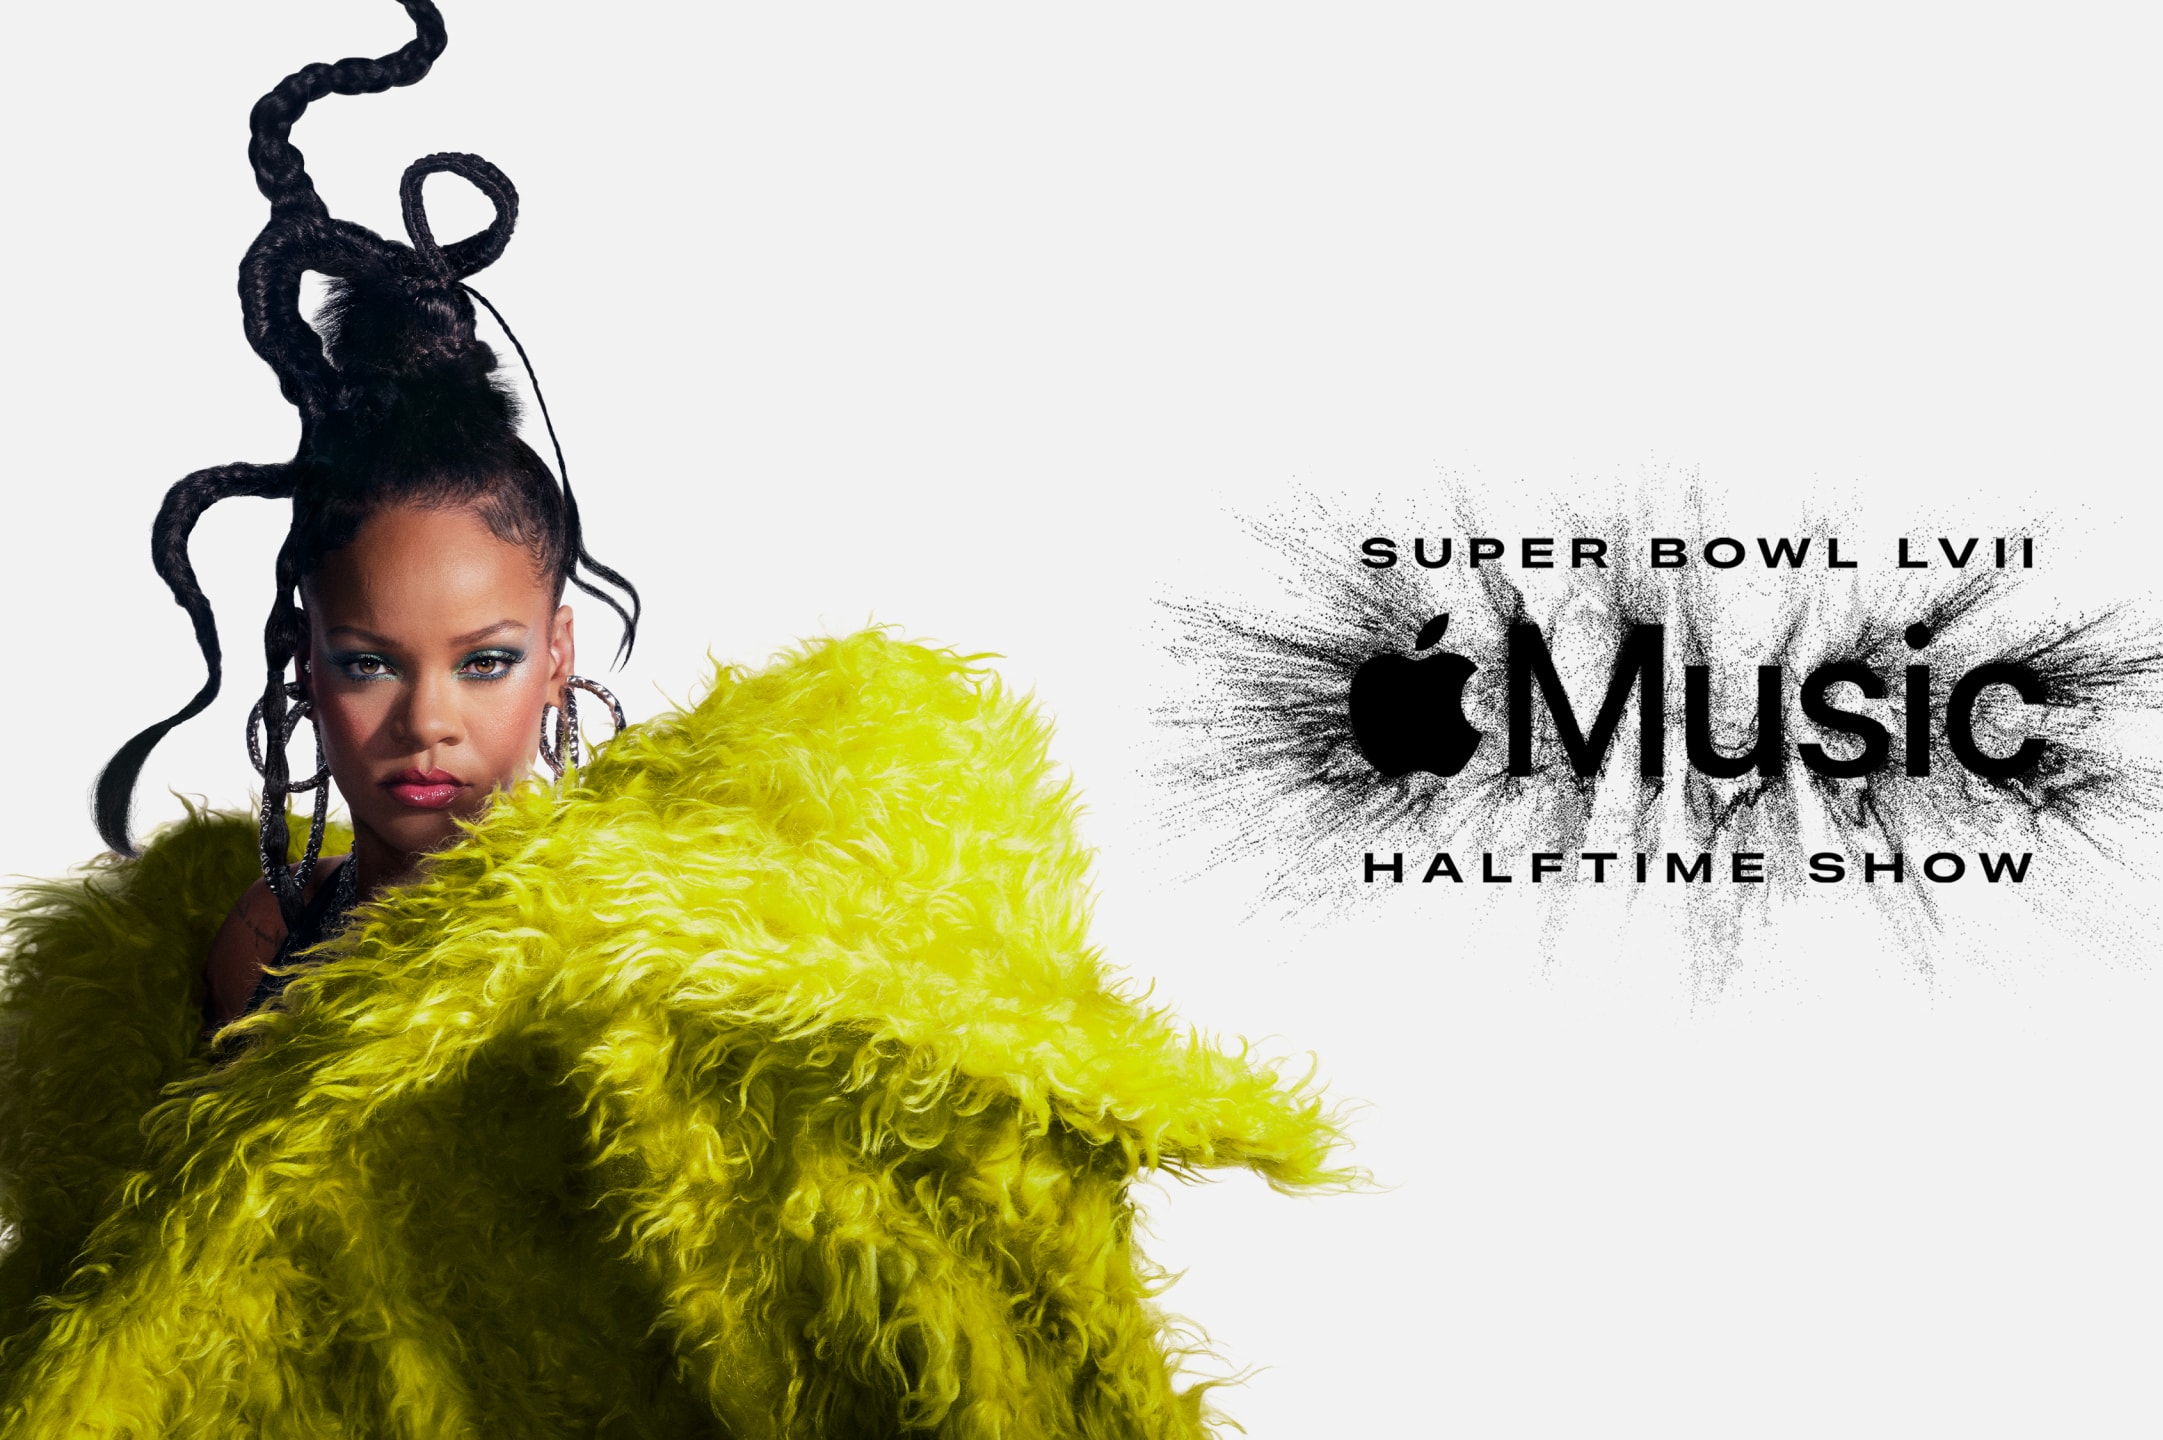 Rihanna 发布首次 Apple Music 超级碗 LVII 中场秀先行预告片